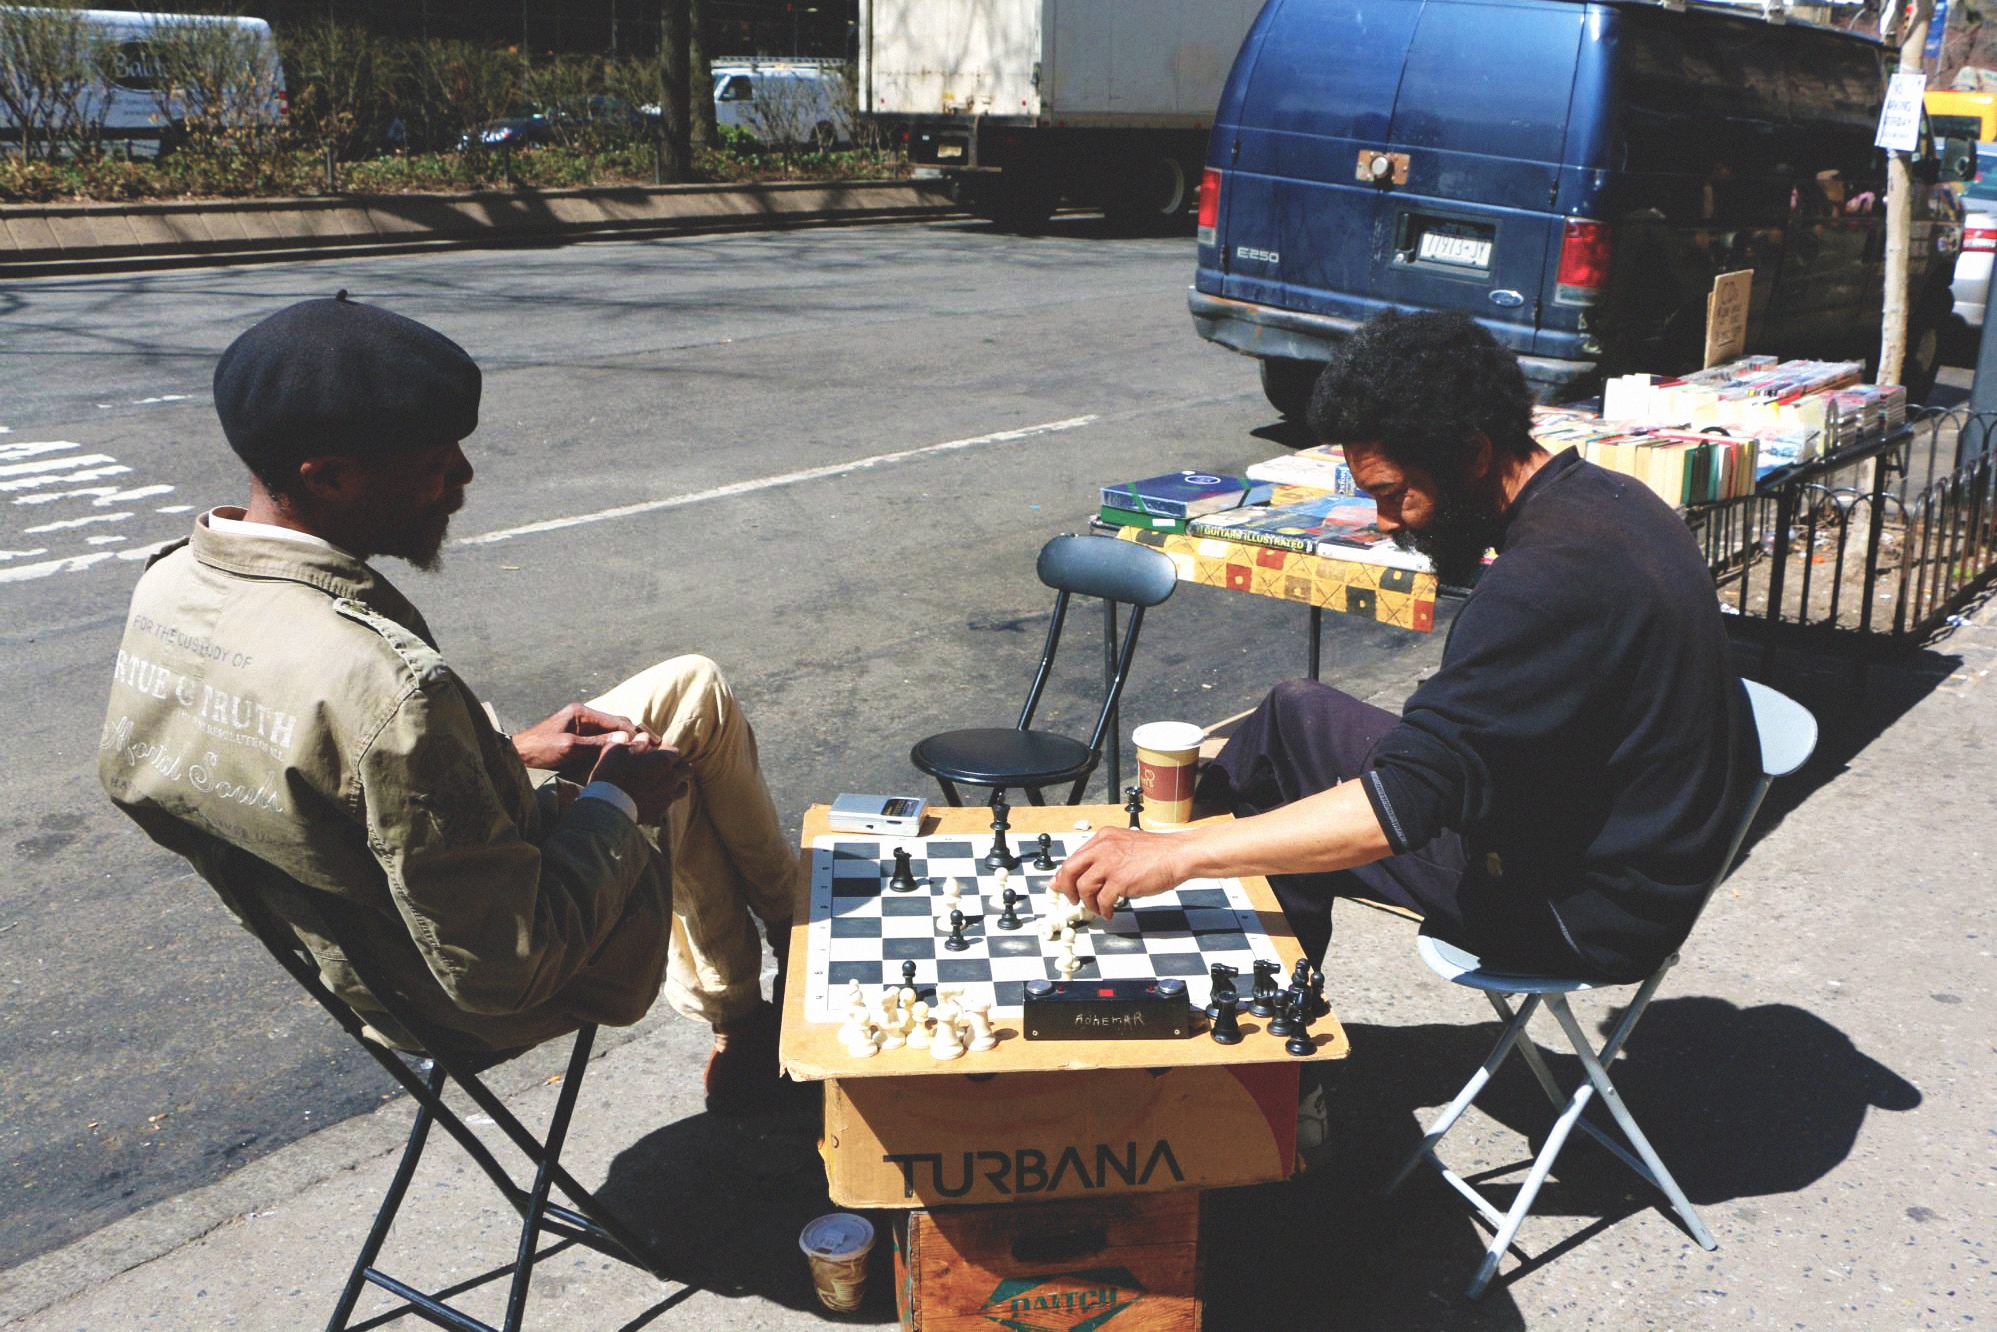 chess players new york, street art